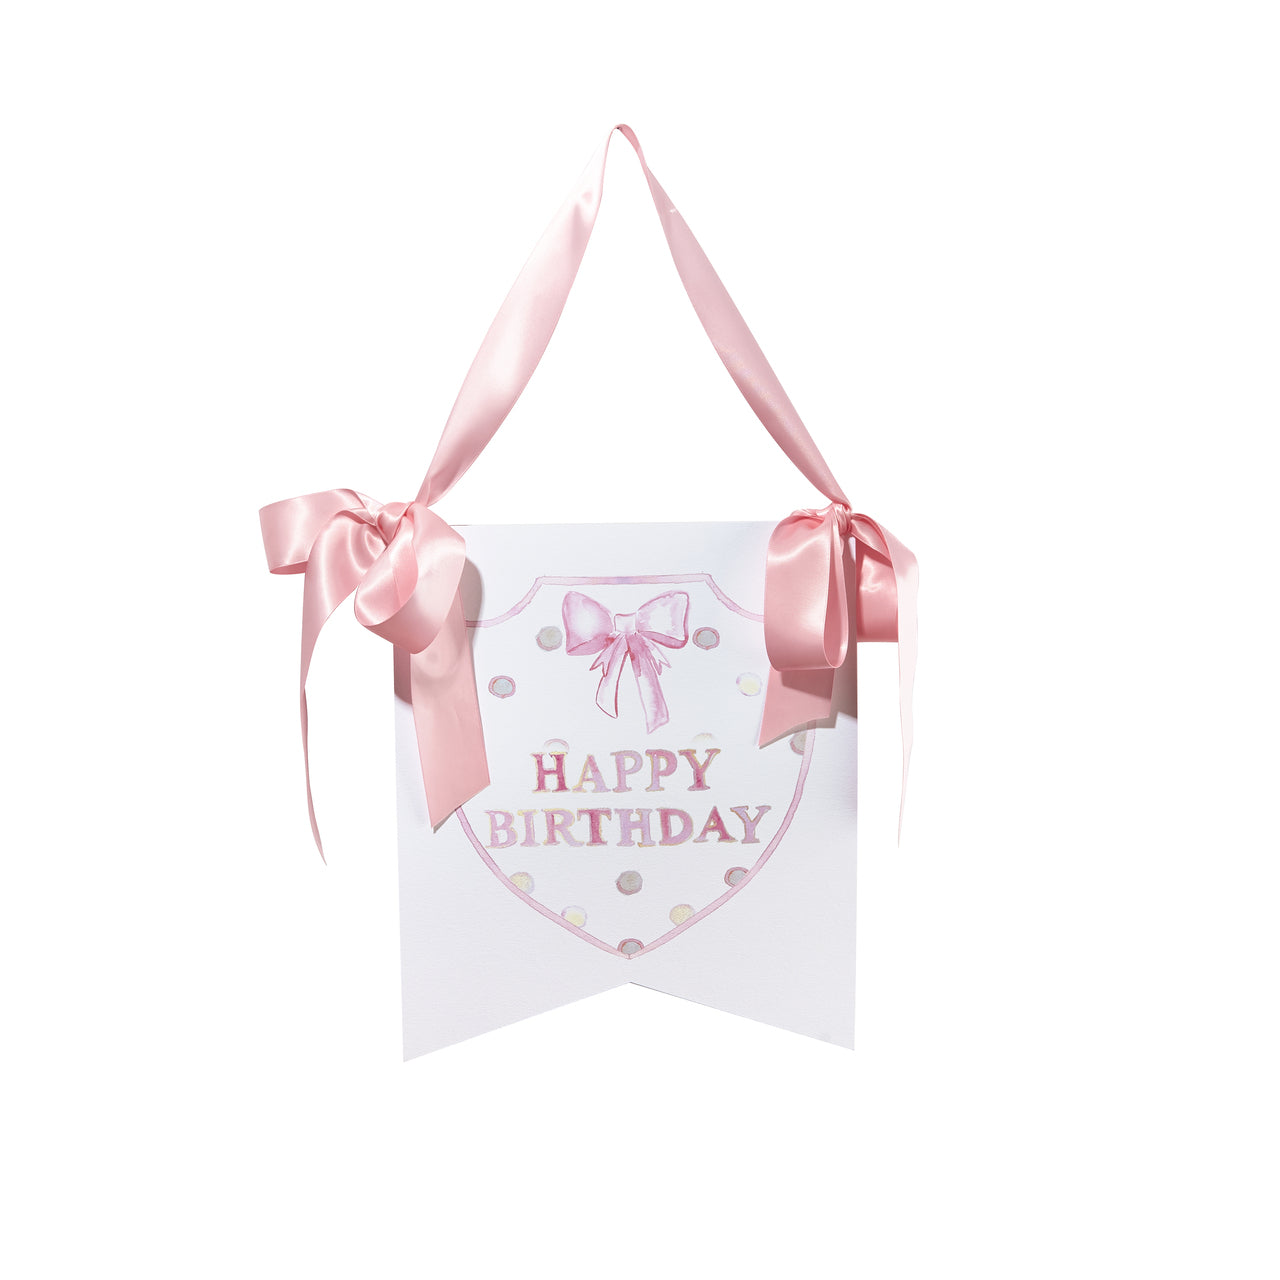 Happy Birthday Pink Bow Hanger